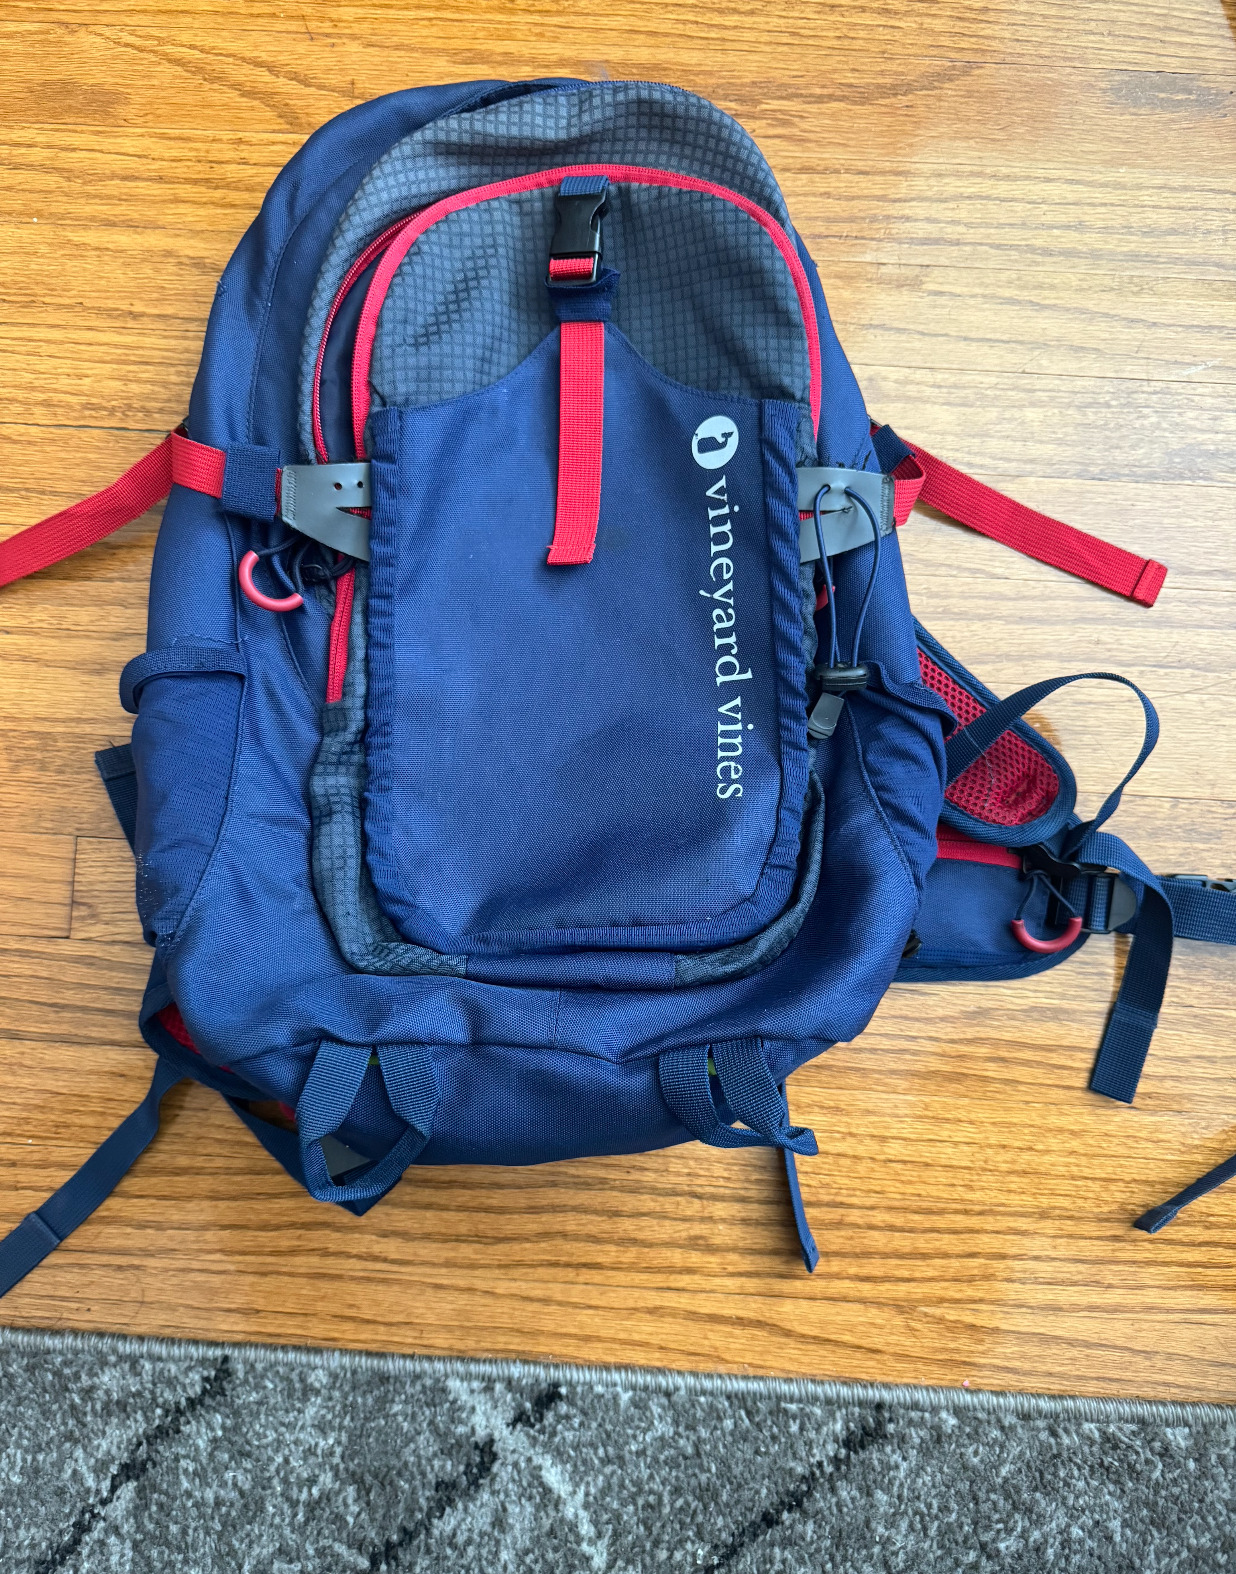 Vineyard Vines Backpack - Blue and Red 